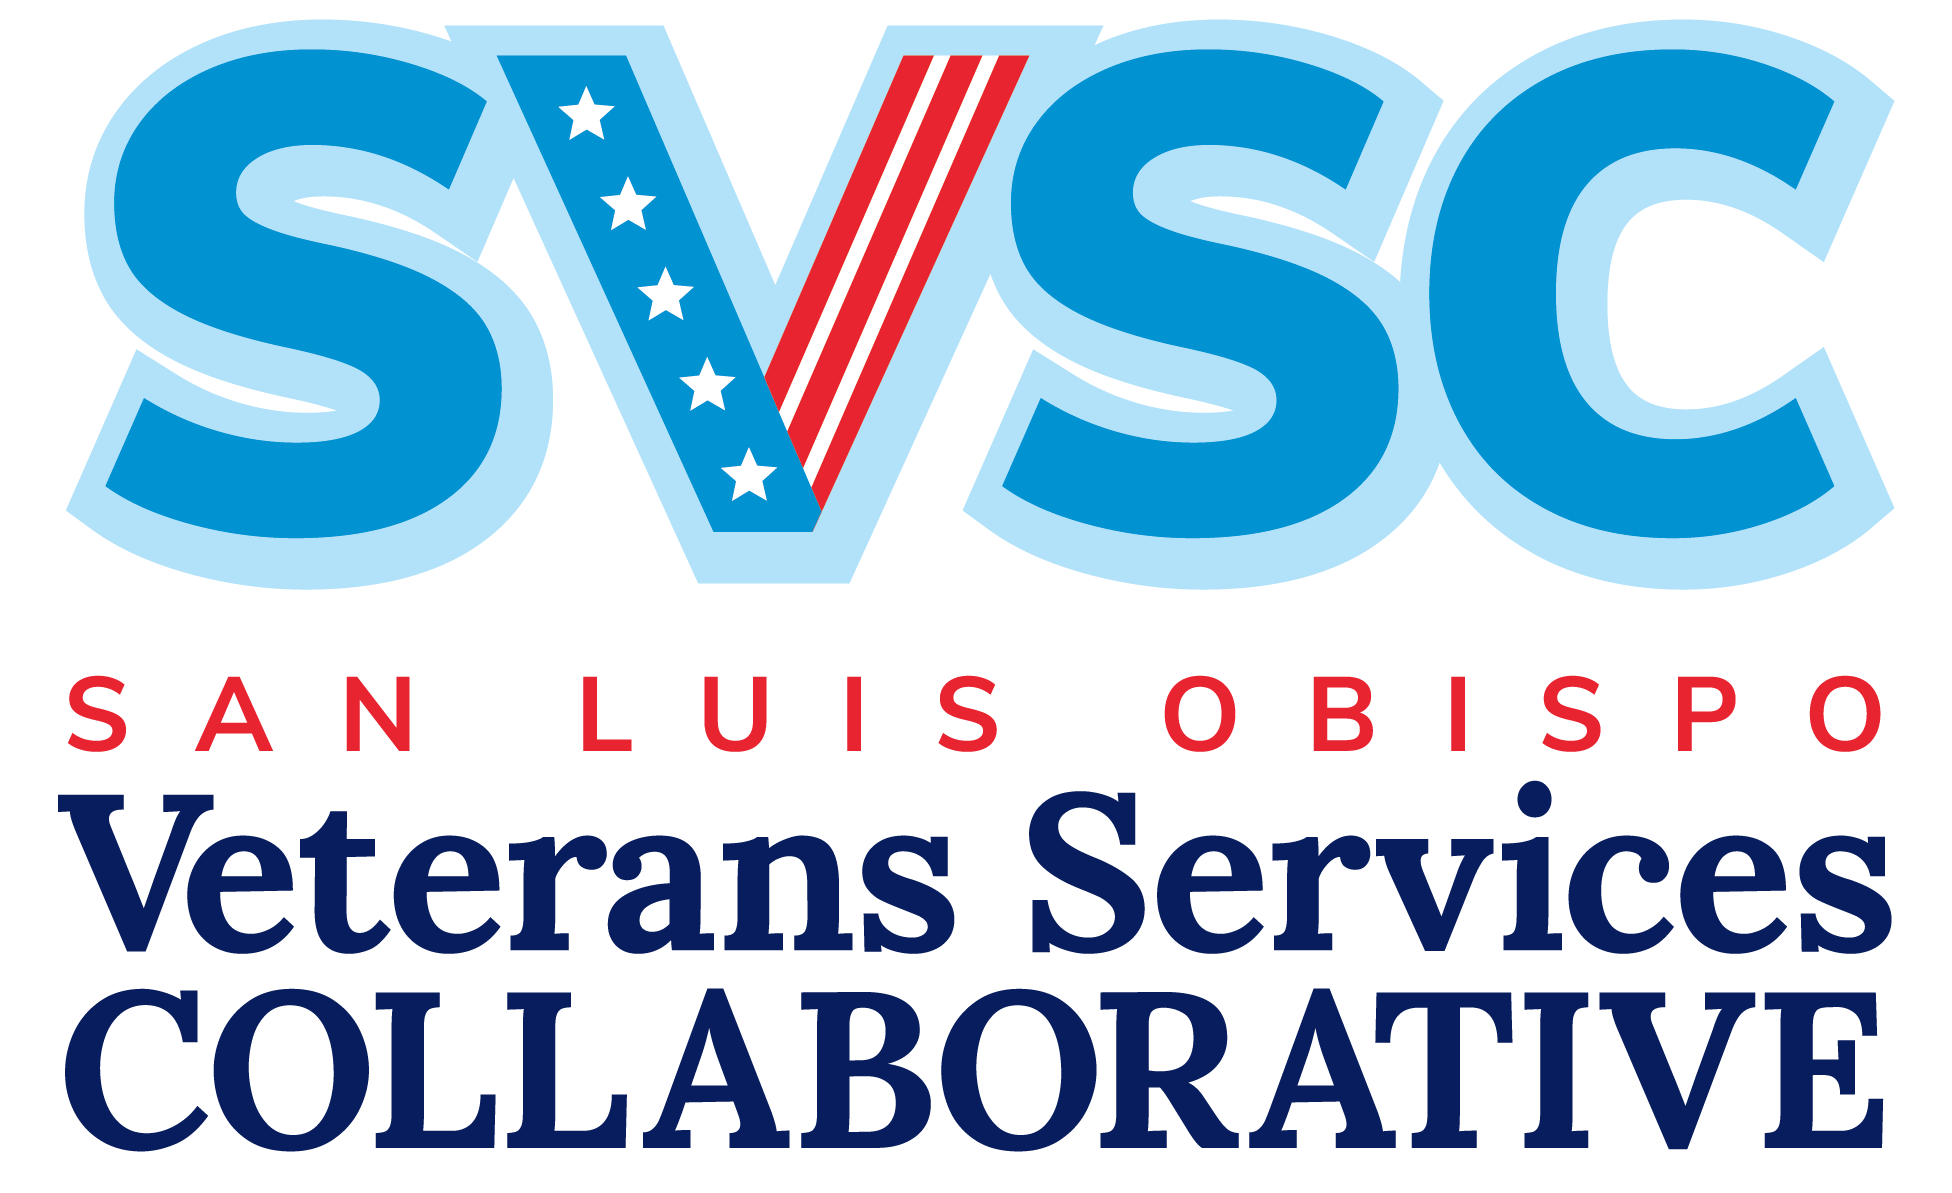 San Luis Obispo Veterans Services Collaborative